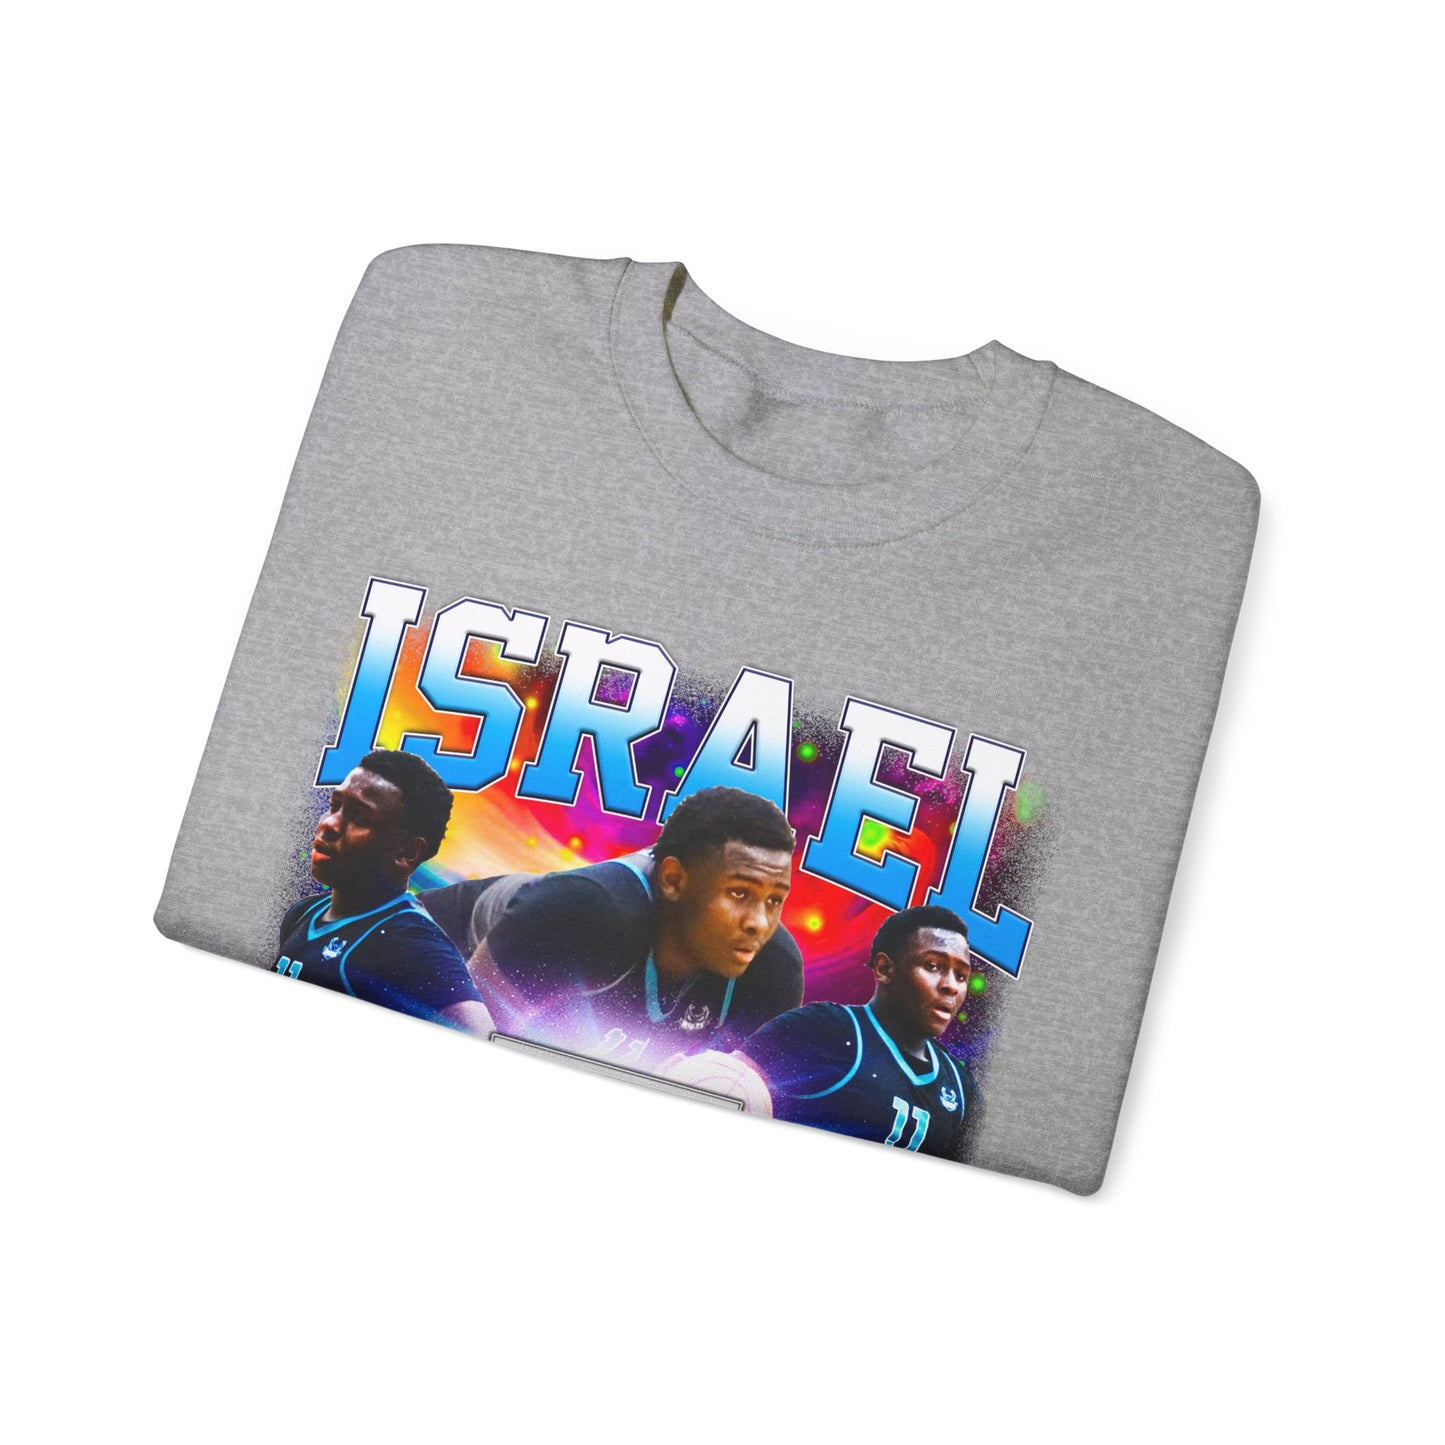 Israel Lakes Crewneck Sweatshirt